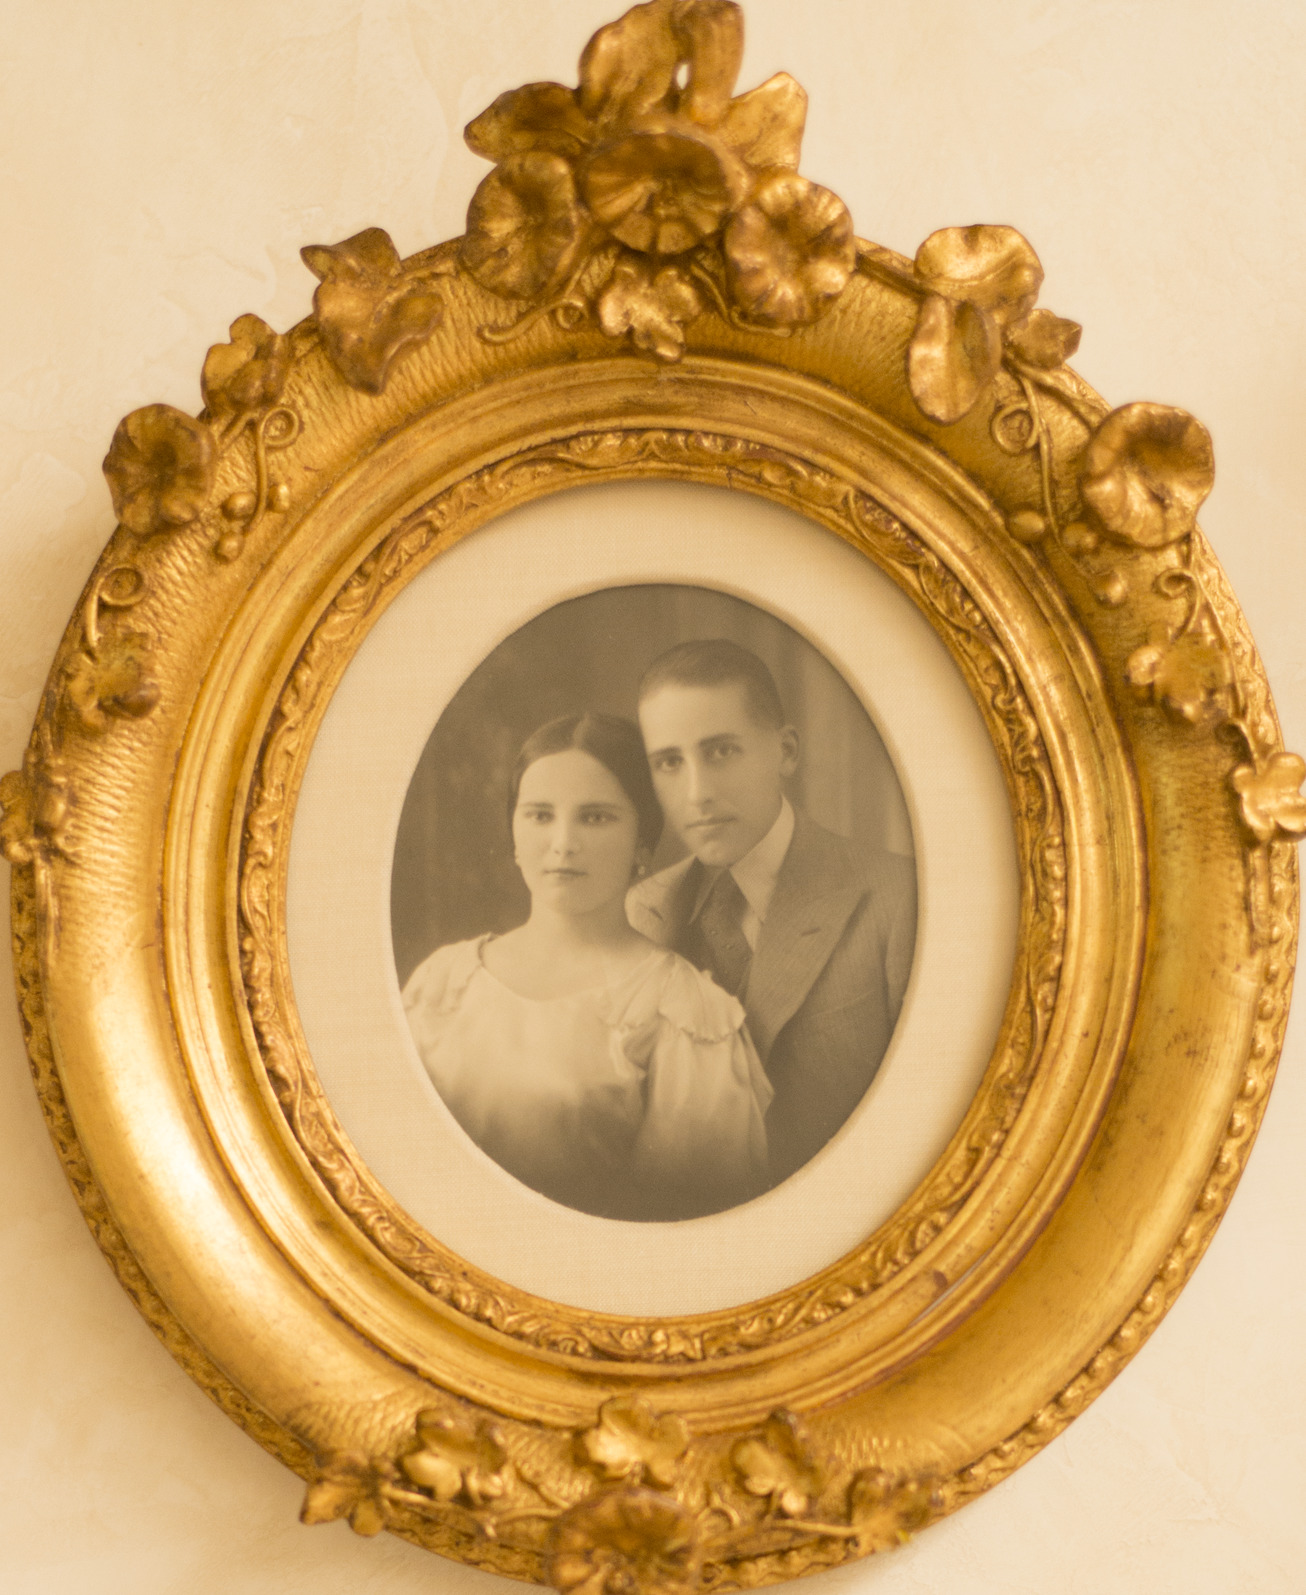 Early Molasky family photographs, image 3